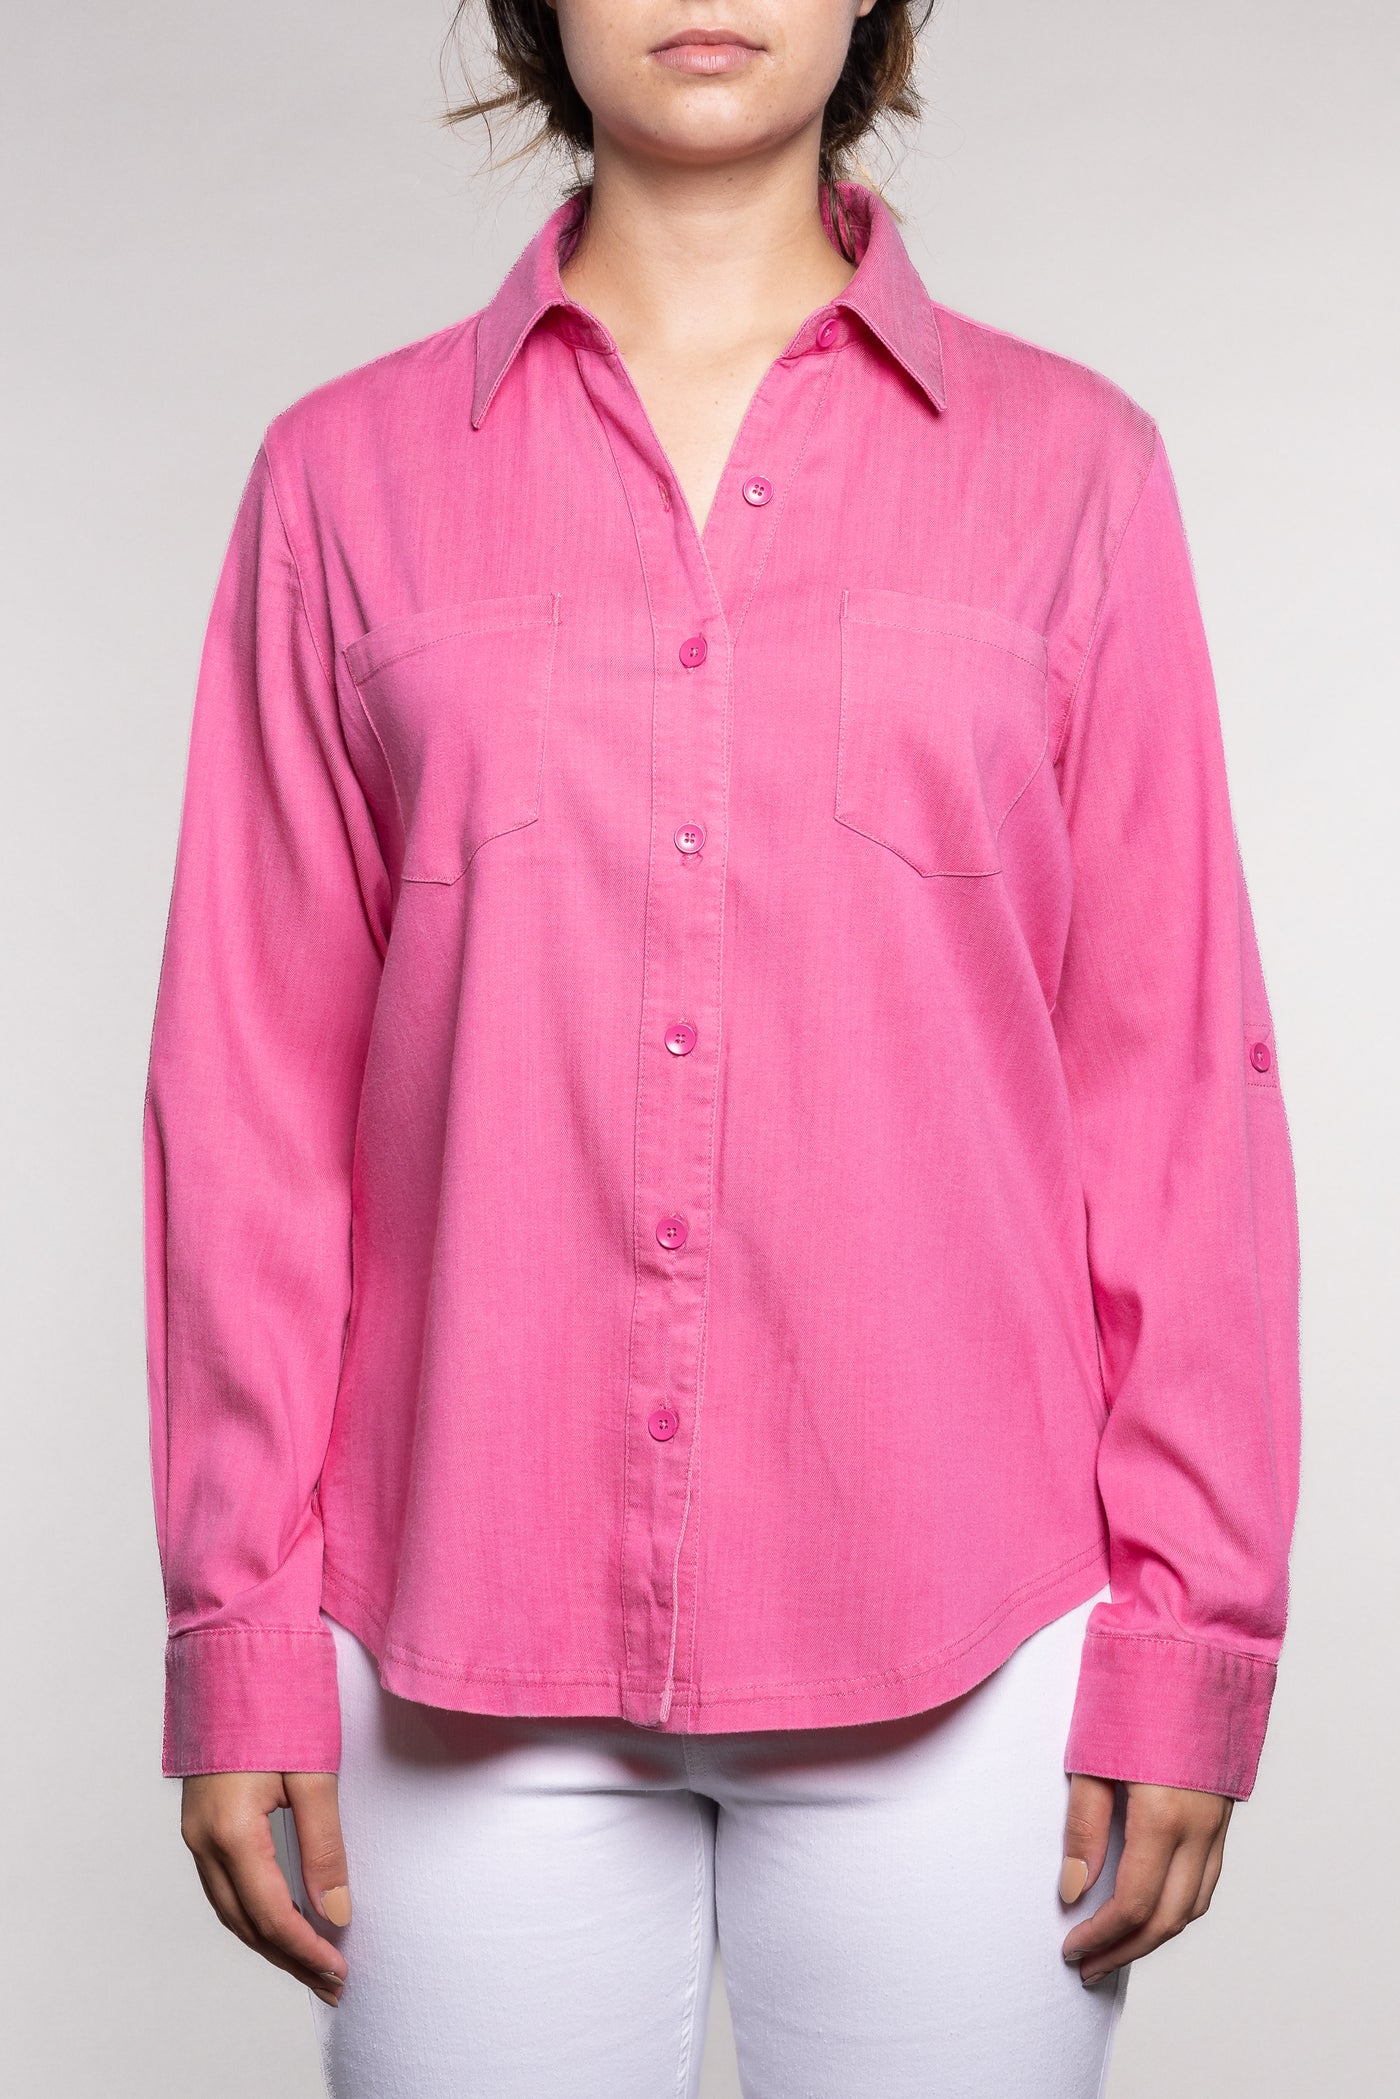 Pink Long Sleeve Blouse